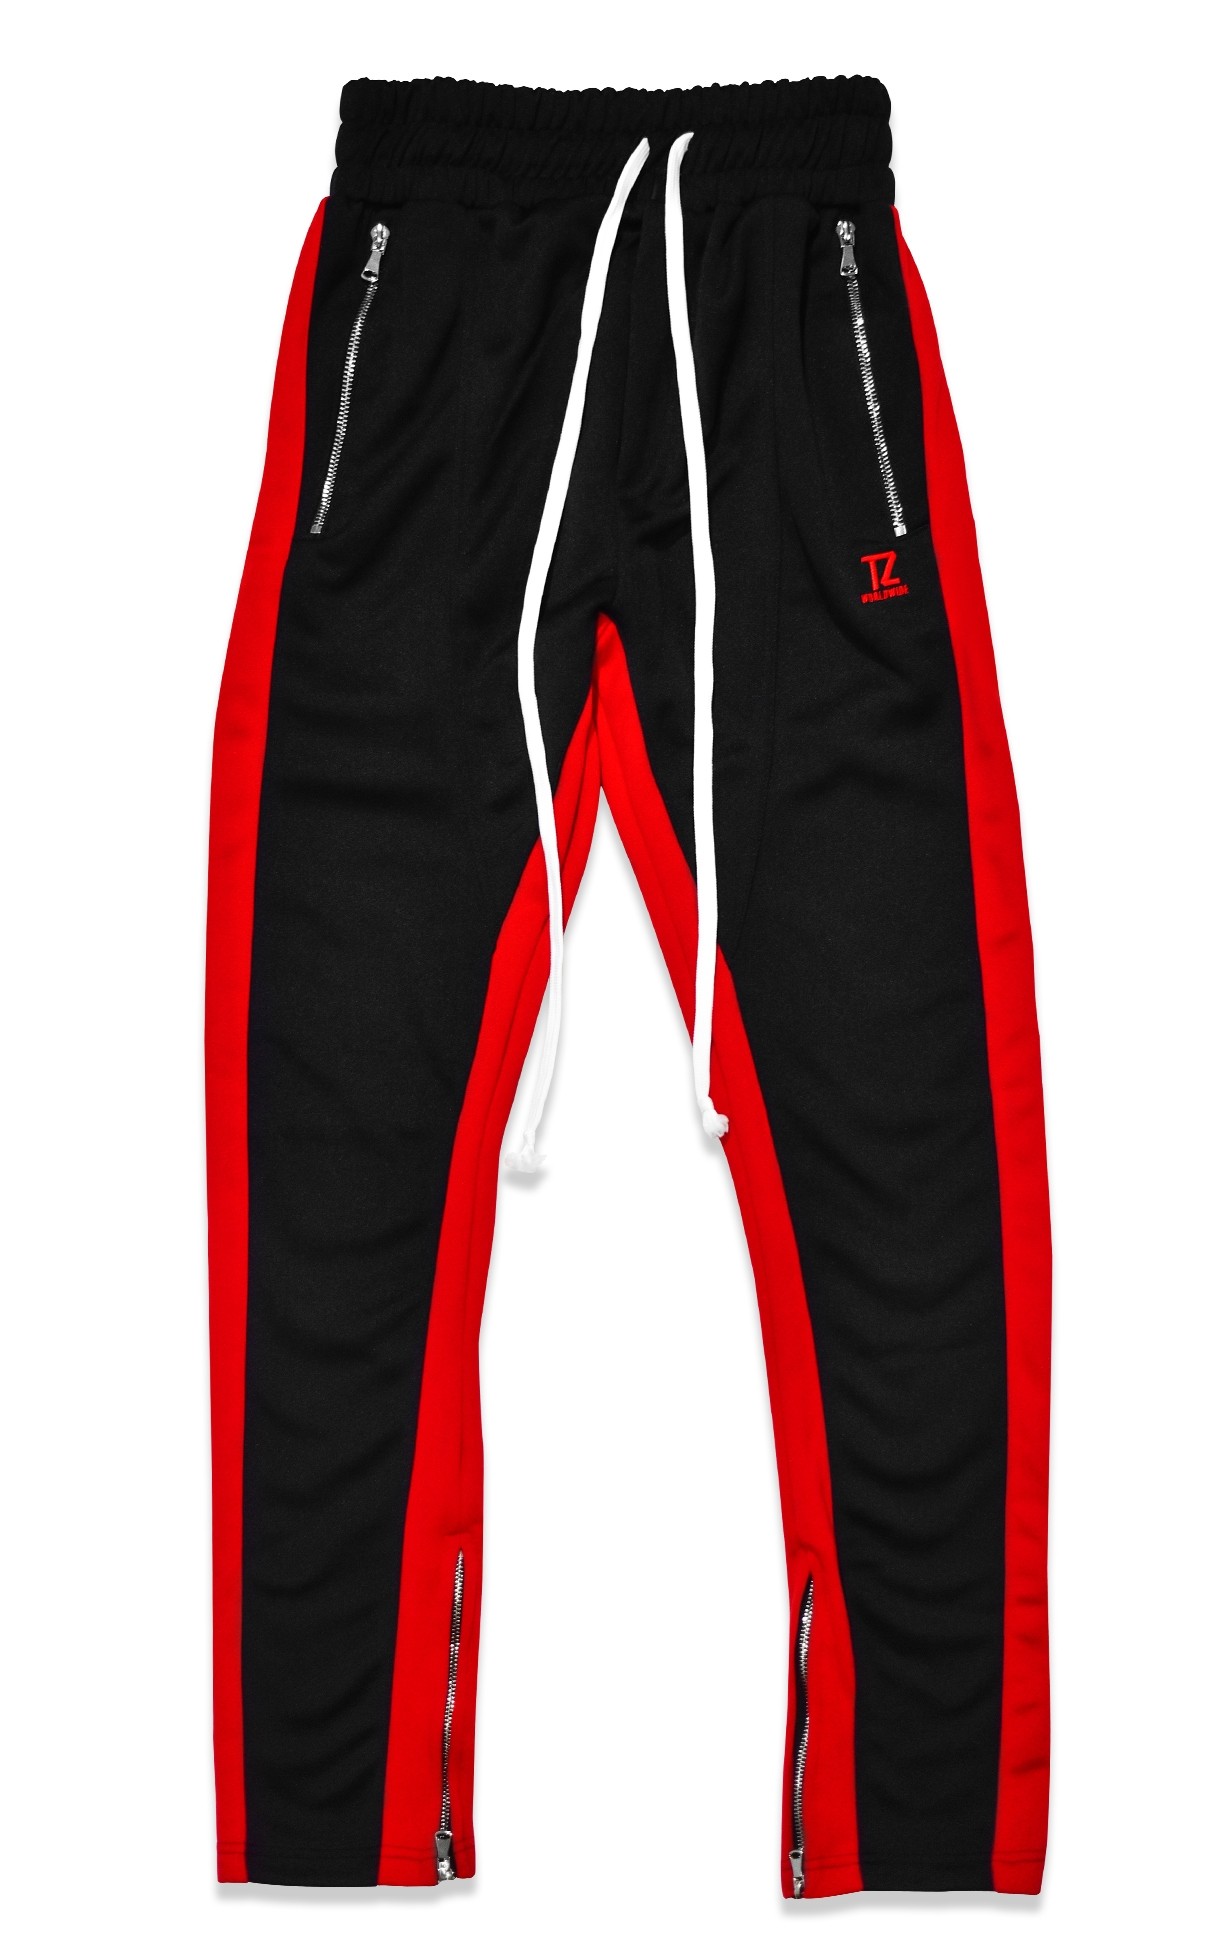 TZ TRACK PANTS (BLACK/RED) Size L